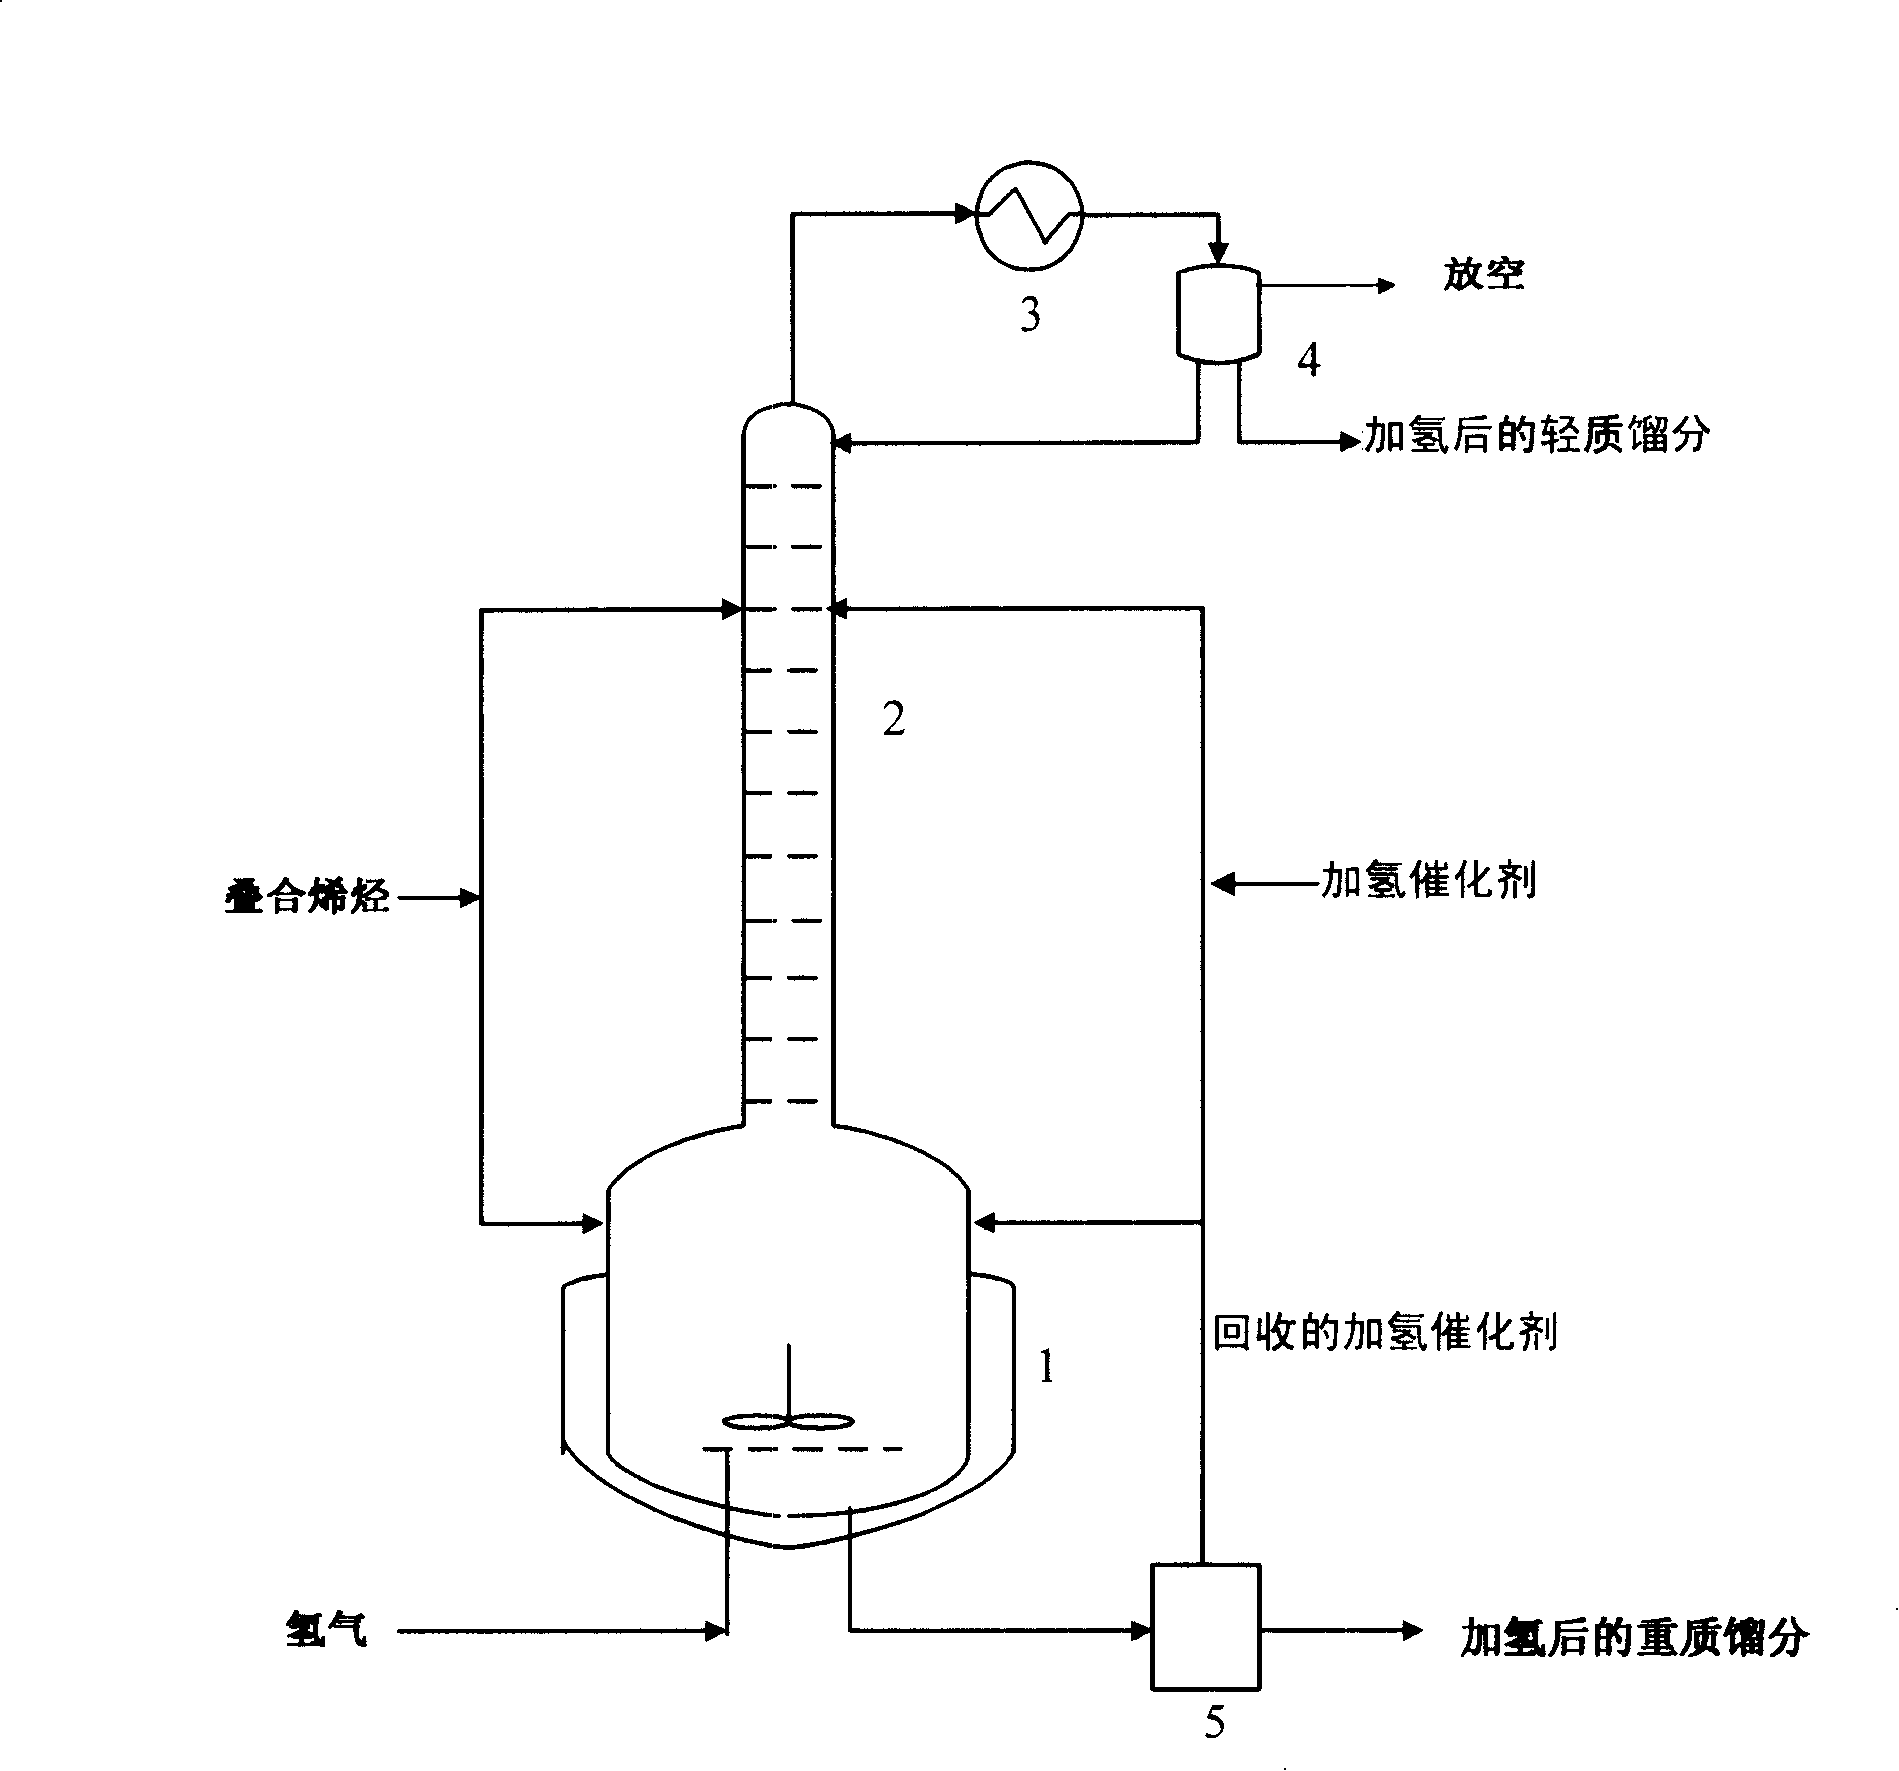 Catalytic hydrogenation method for olefin